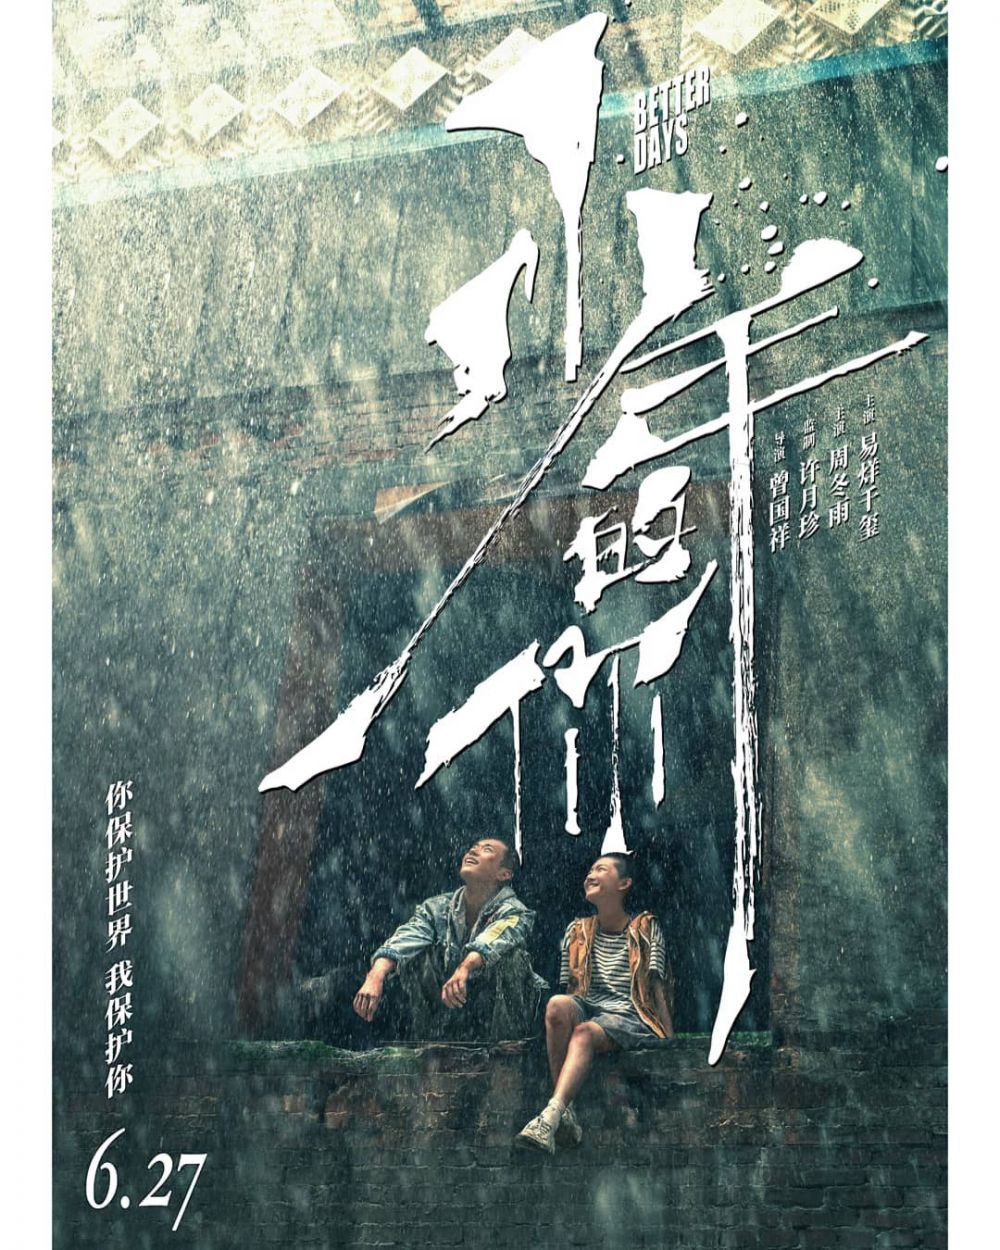 10 Film China terbaik rilis akhir 2019, mana favoritmu?